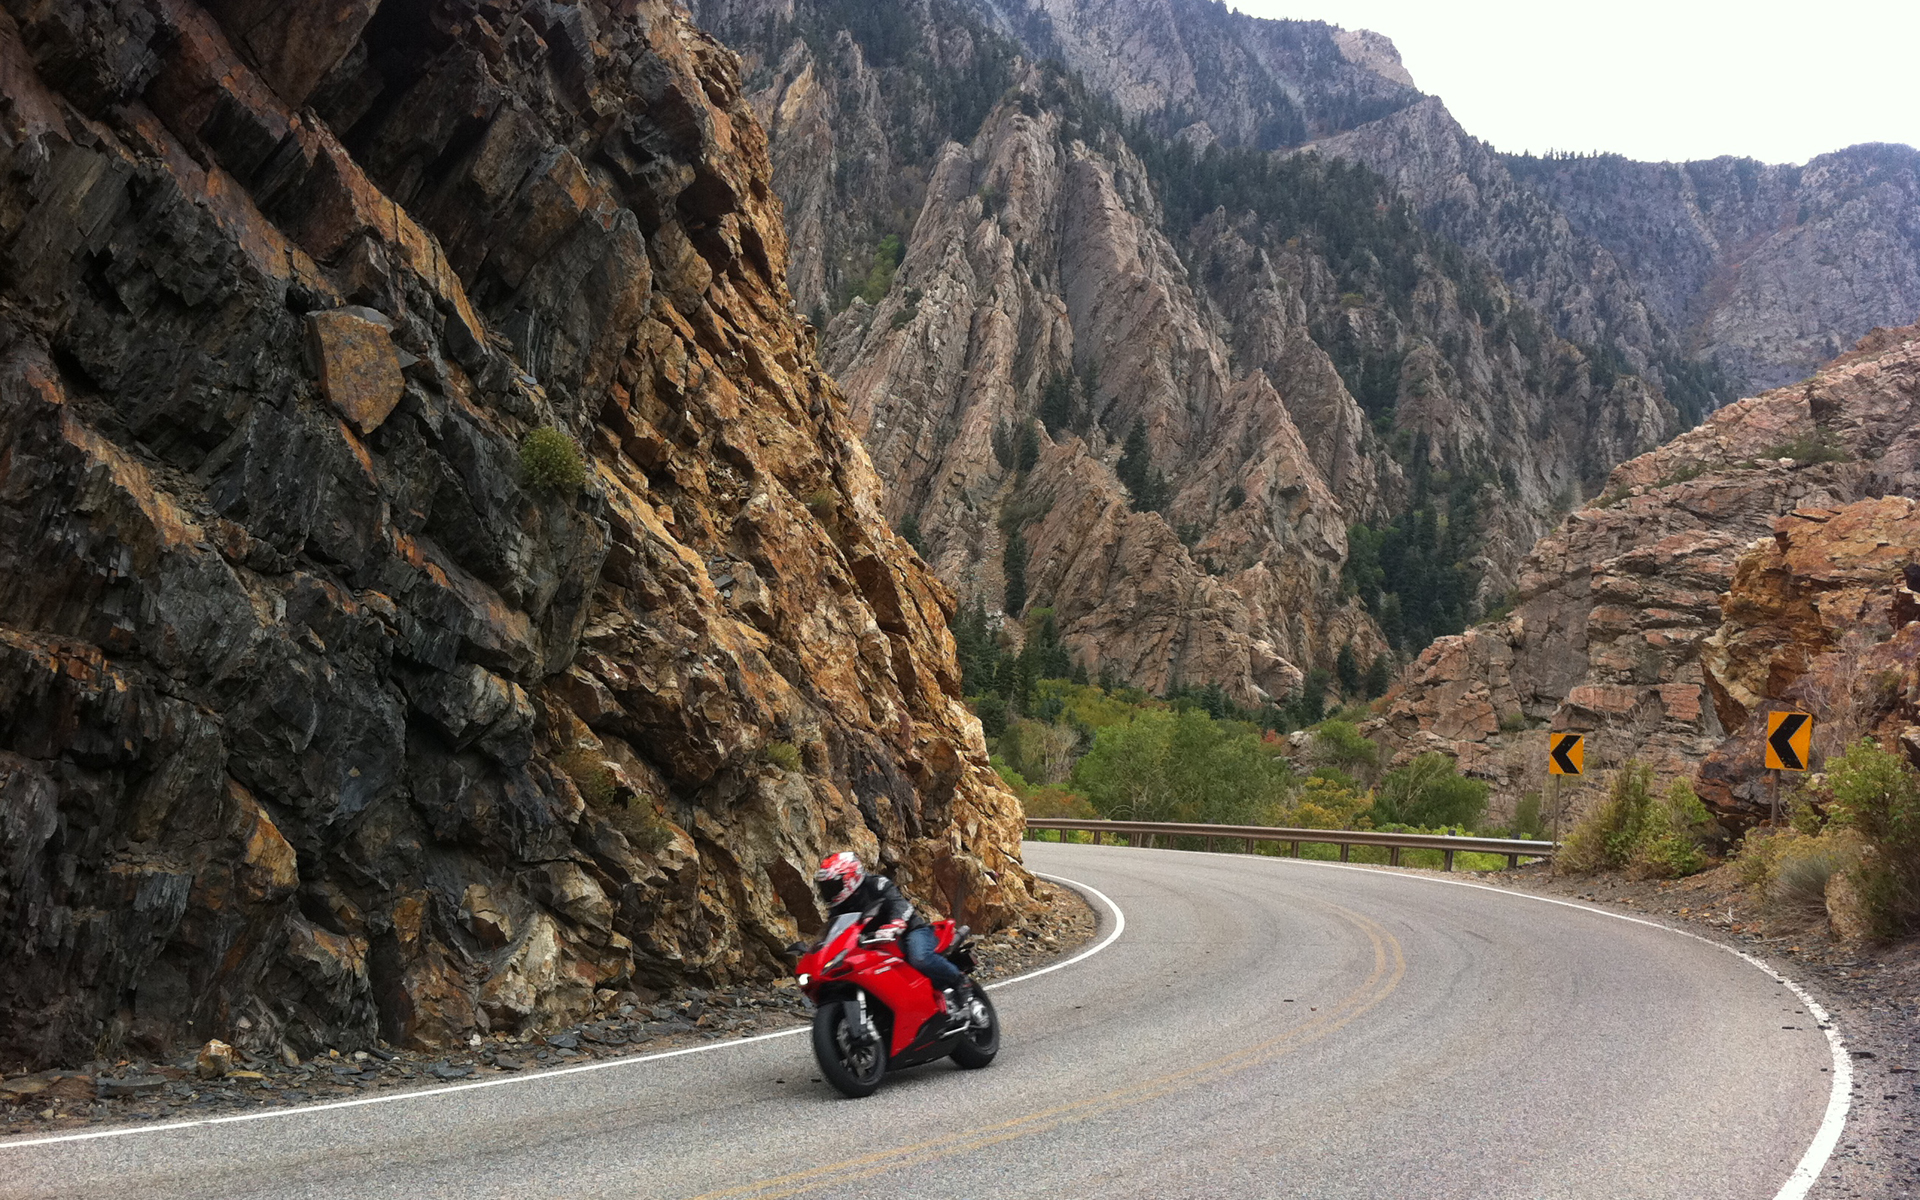 ducati, motorcycles, vehicles, canyon, motorcycle